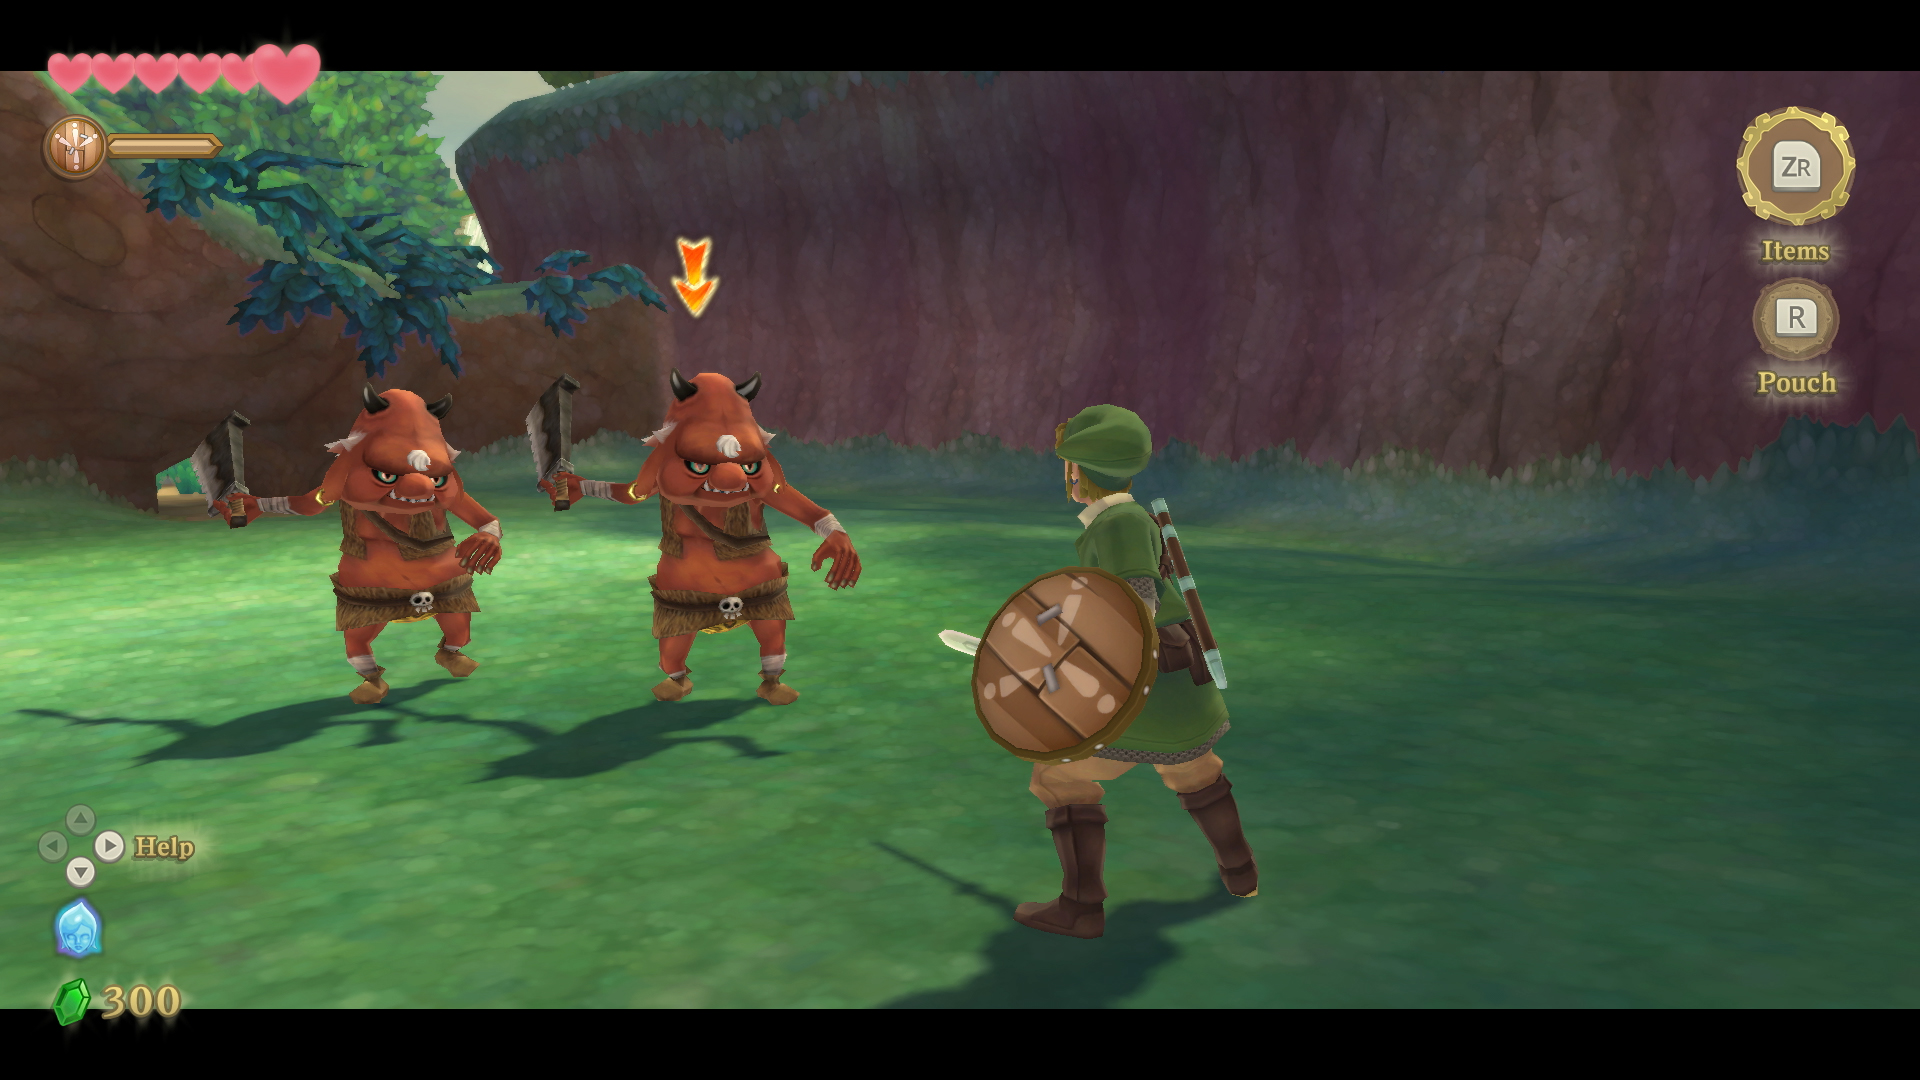 The Legend of Zelda: Skyward Sword HD - 30 mins of Nintendo Switch Gameplay  (Intro) 